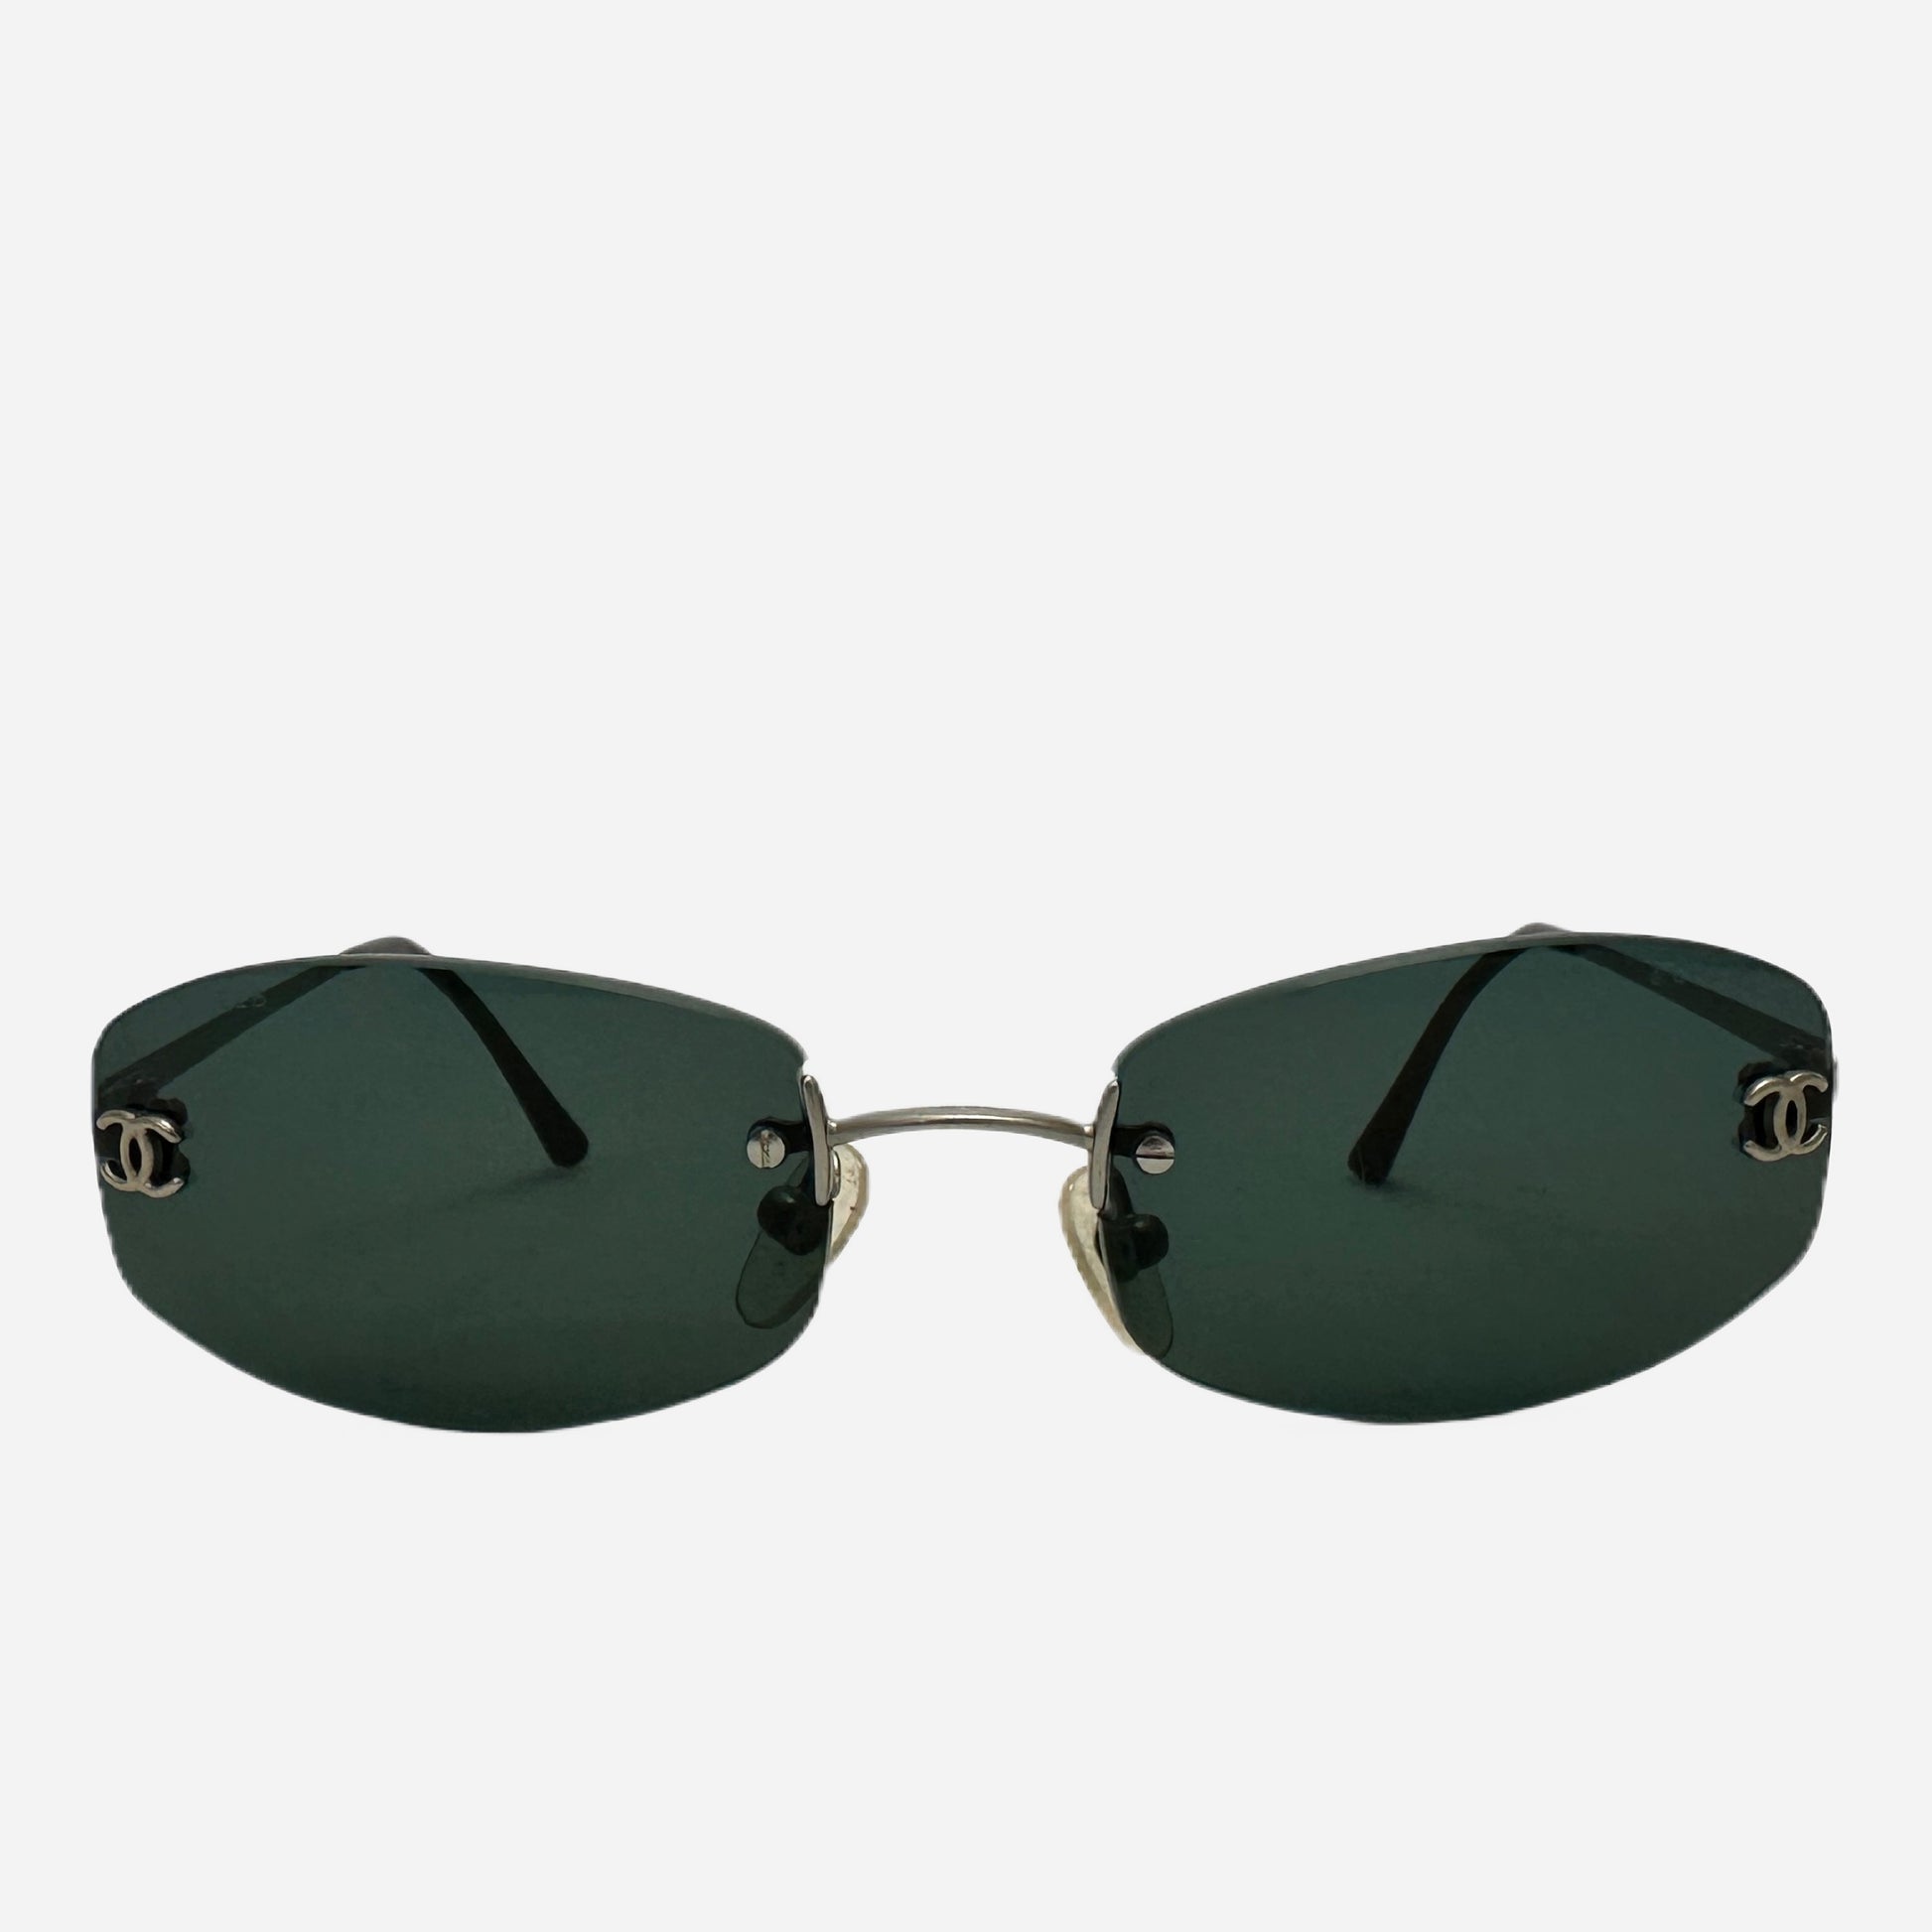 Vintage Coco Chanel sunglasses